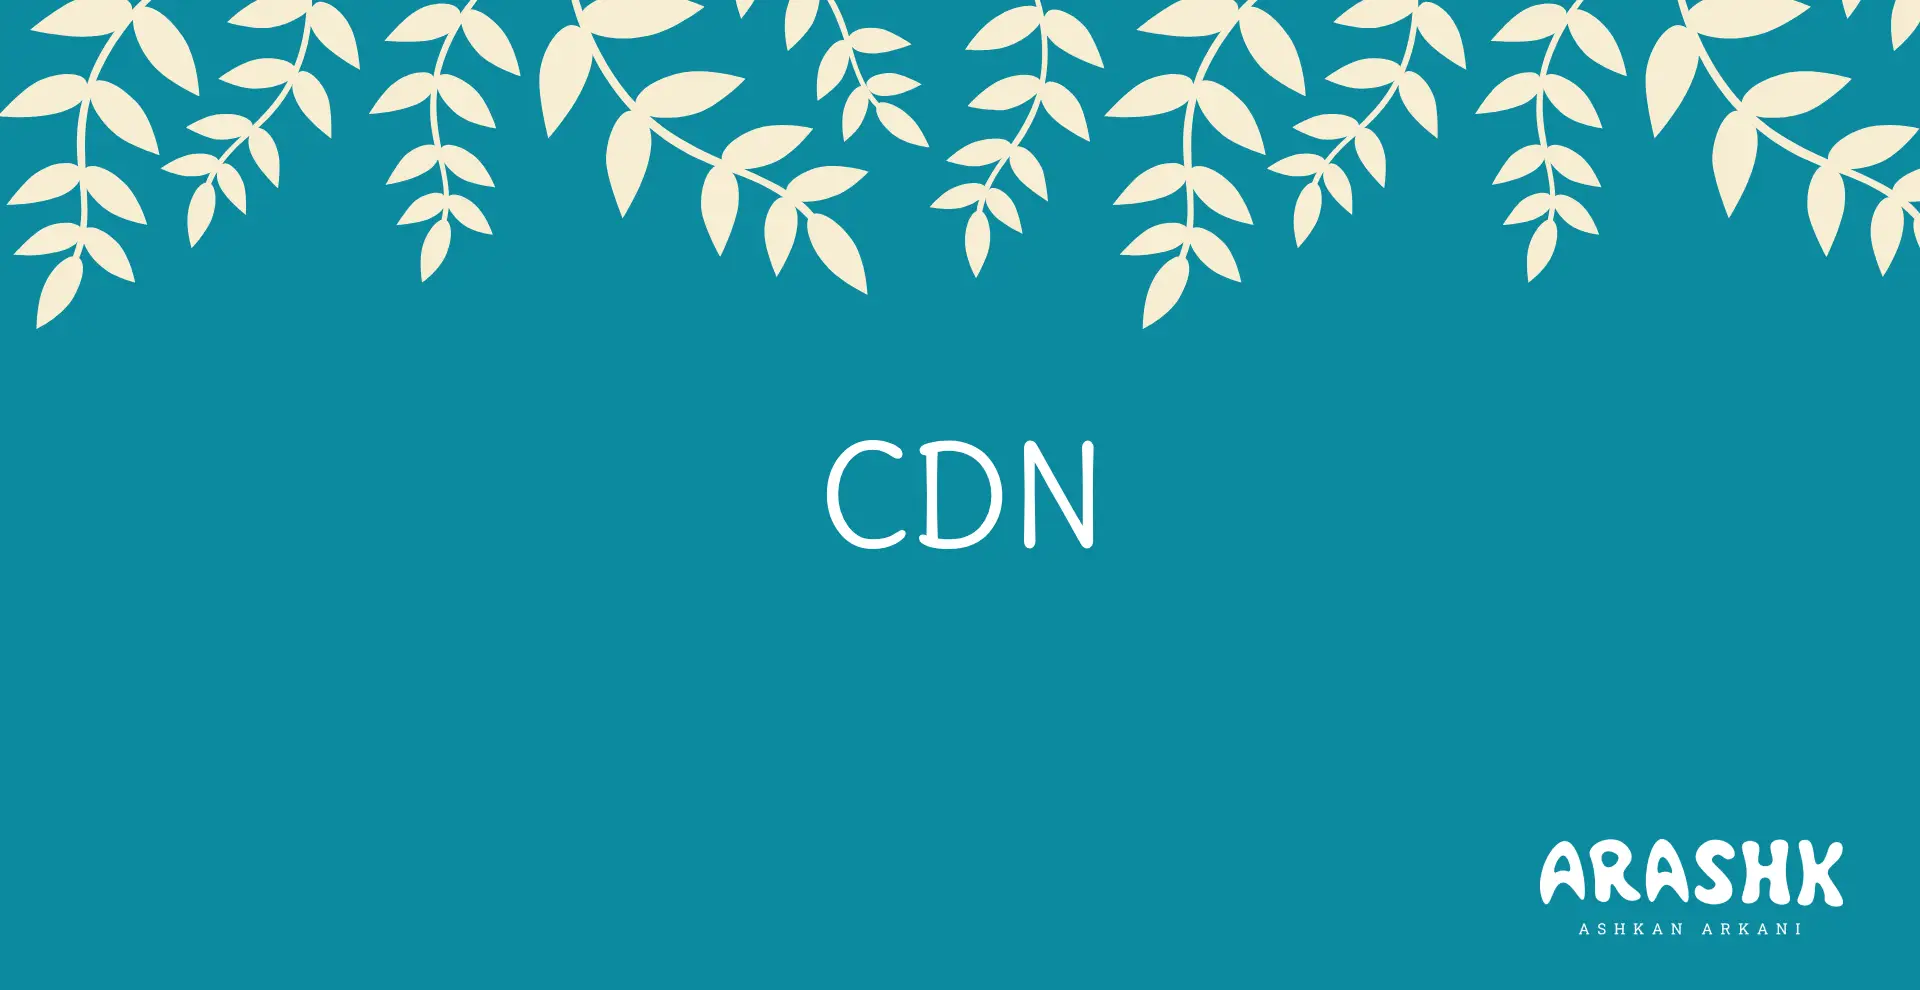 CDN یا شبکه توزیع محتوا چیست